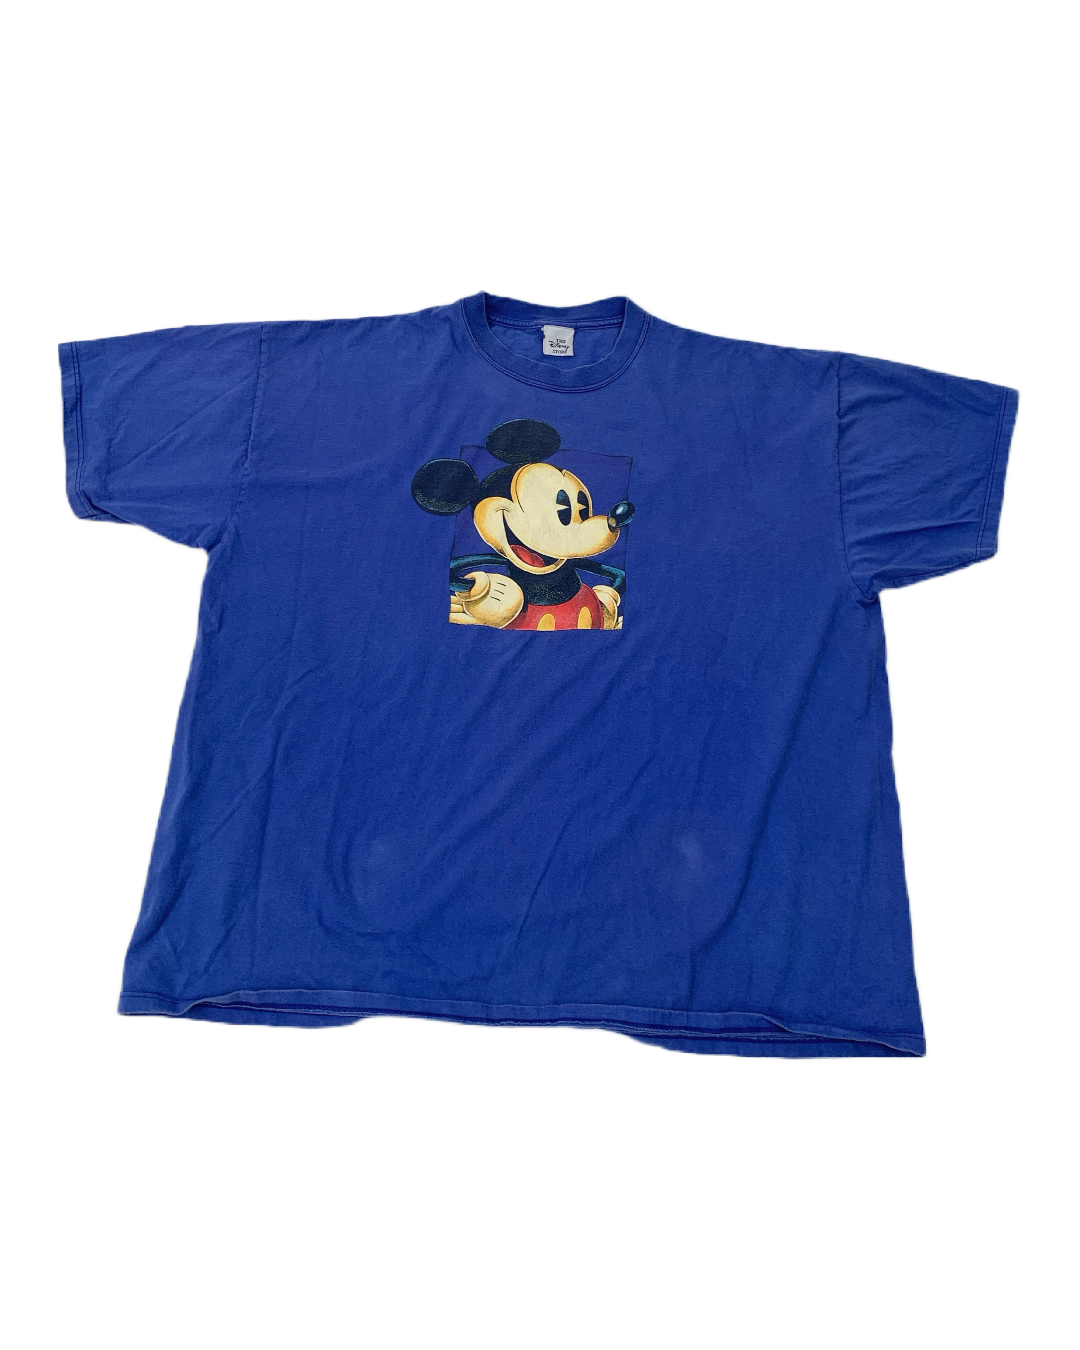 Mickey Mouse Disney Vintage Tee - XL